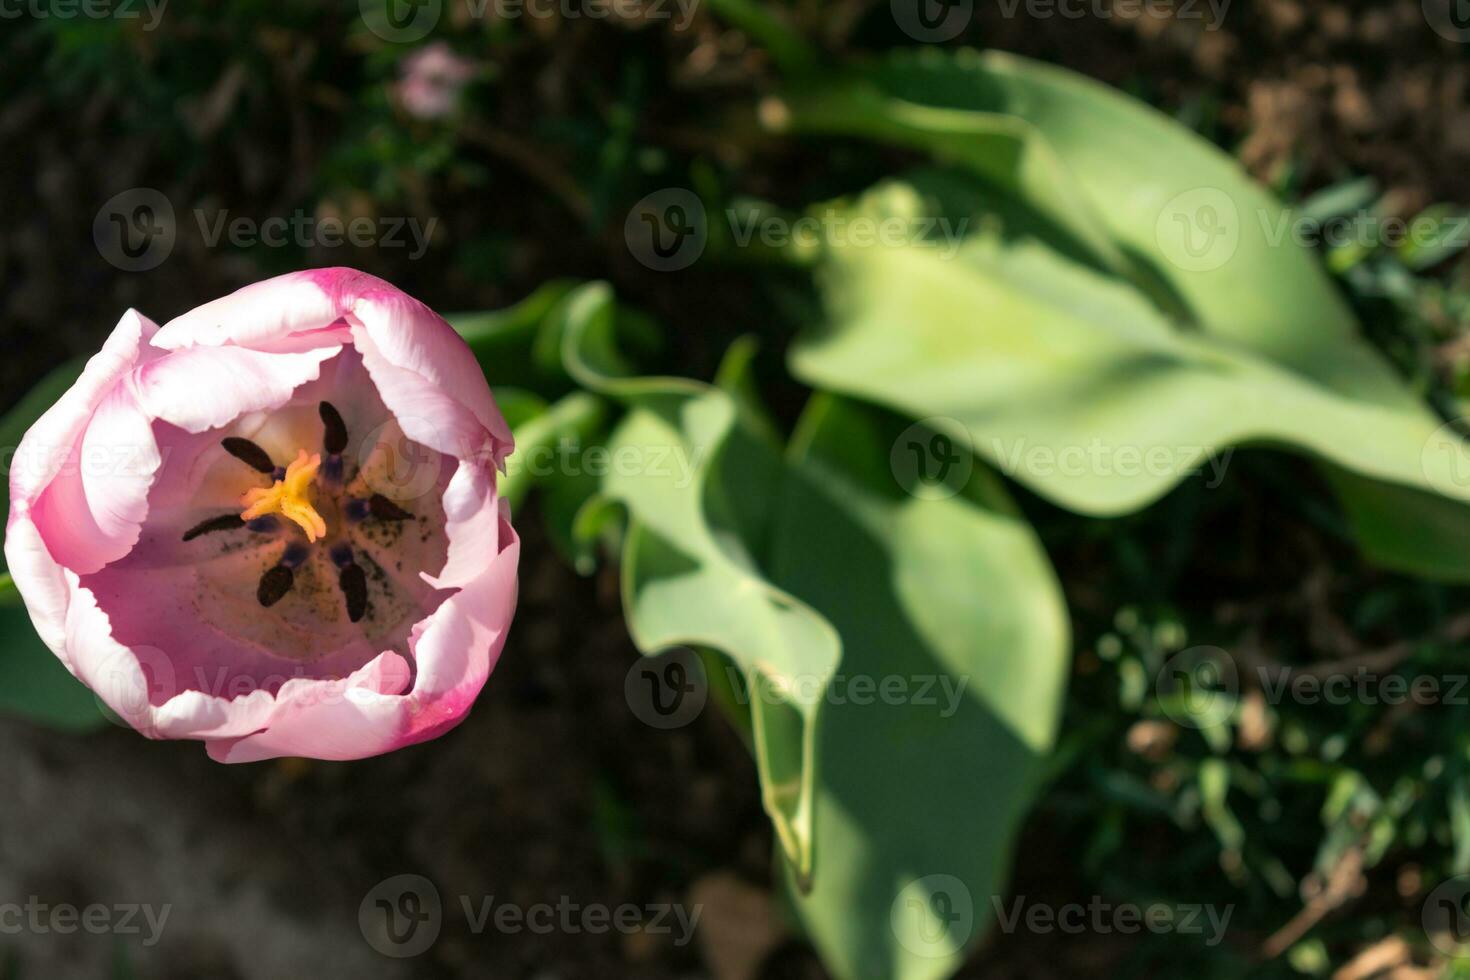 Close up on pink tulip, tulipa photo